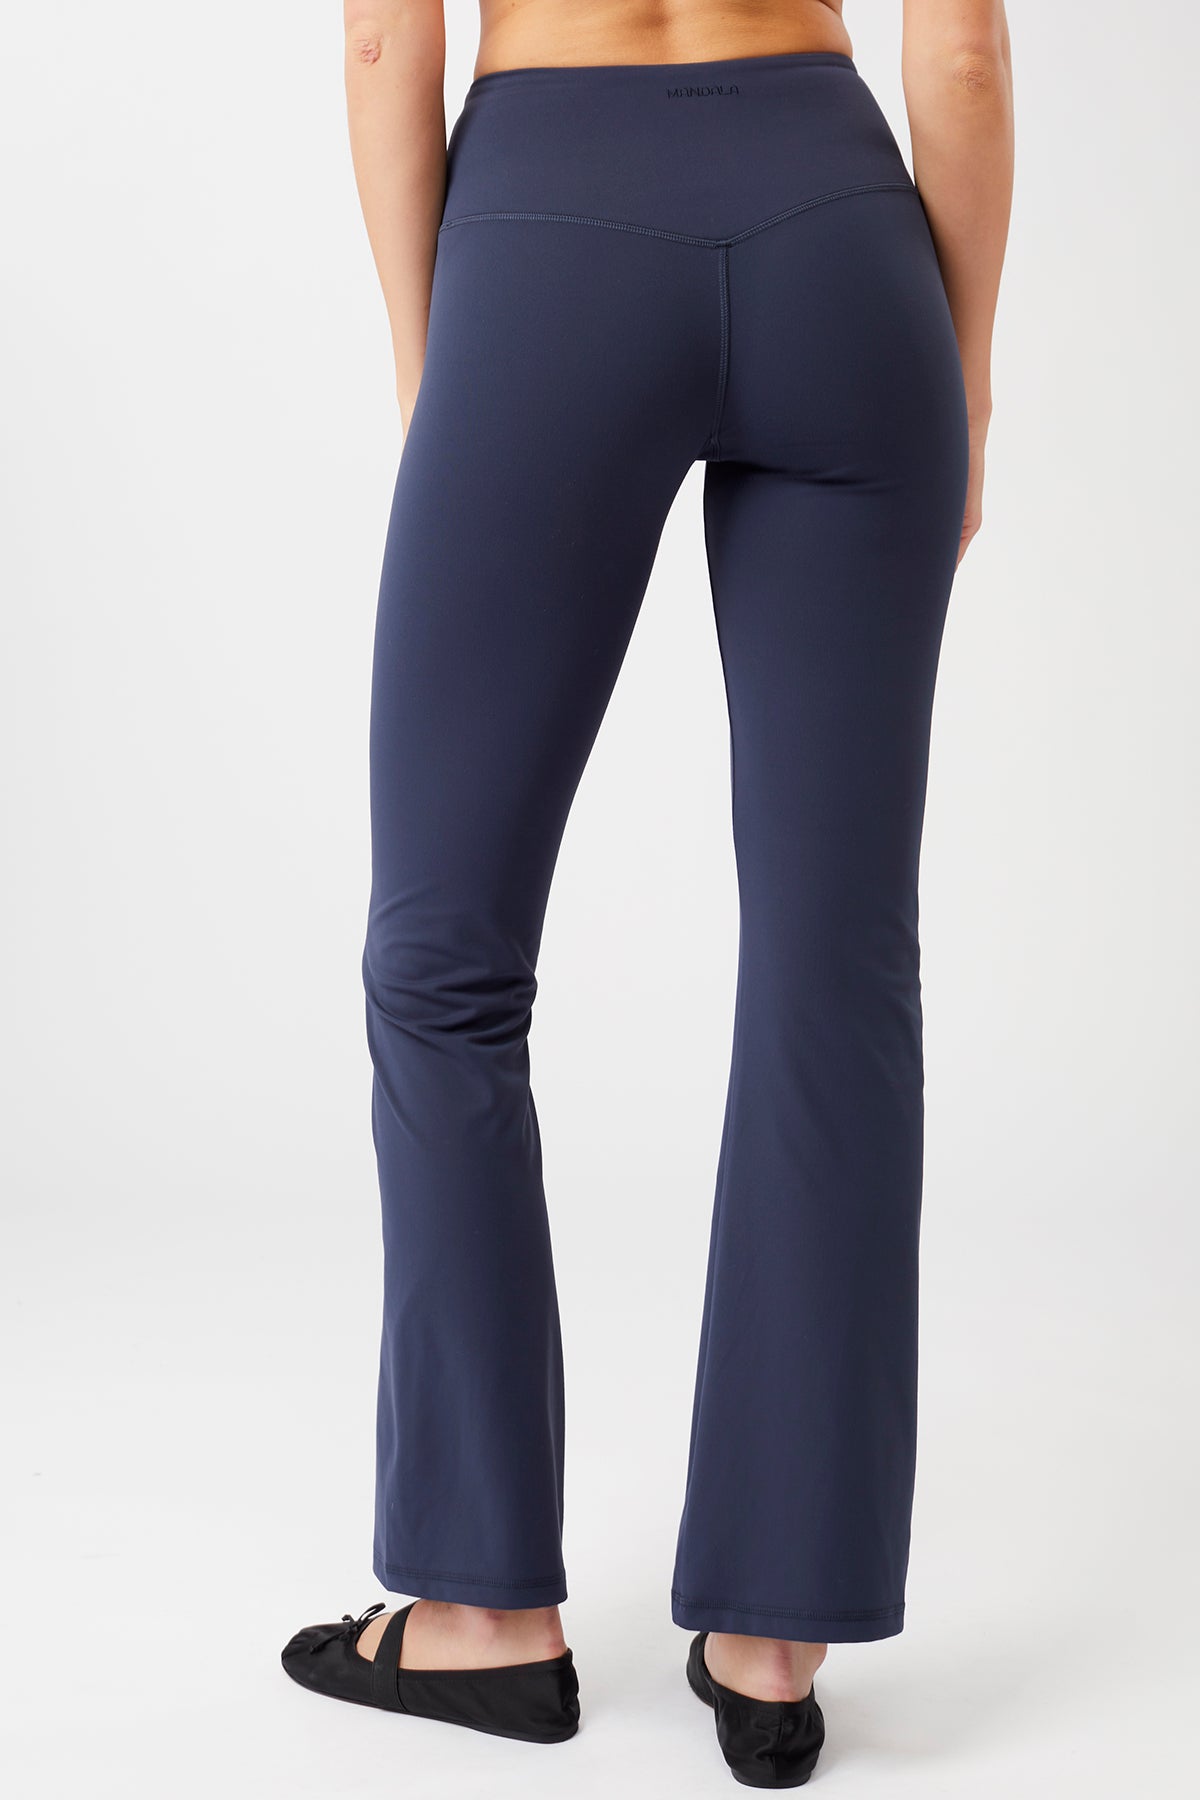 Mandala Yoga Pant Blau Rückseite - Flared Sport Pants